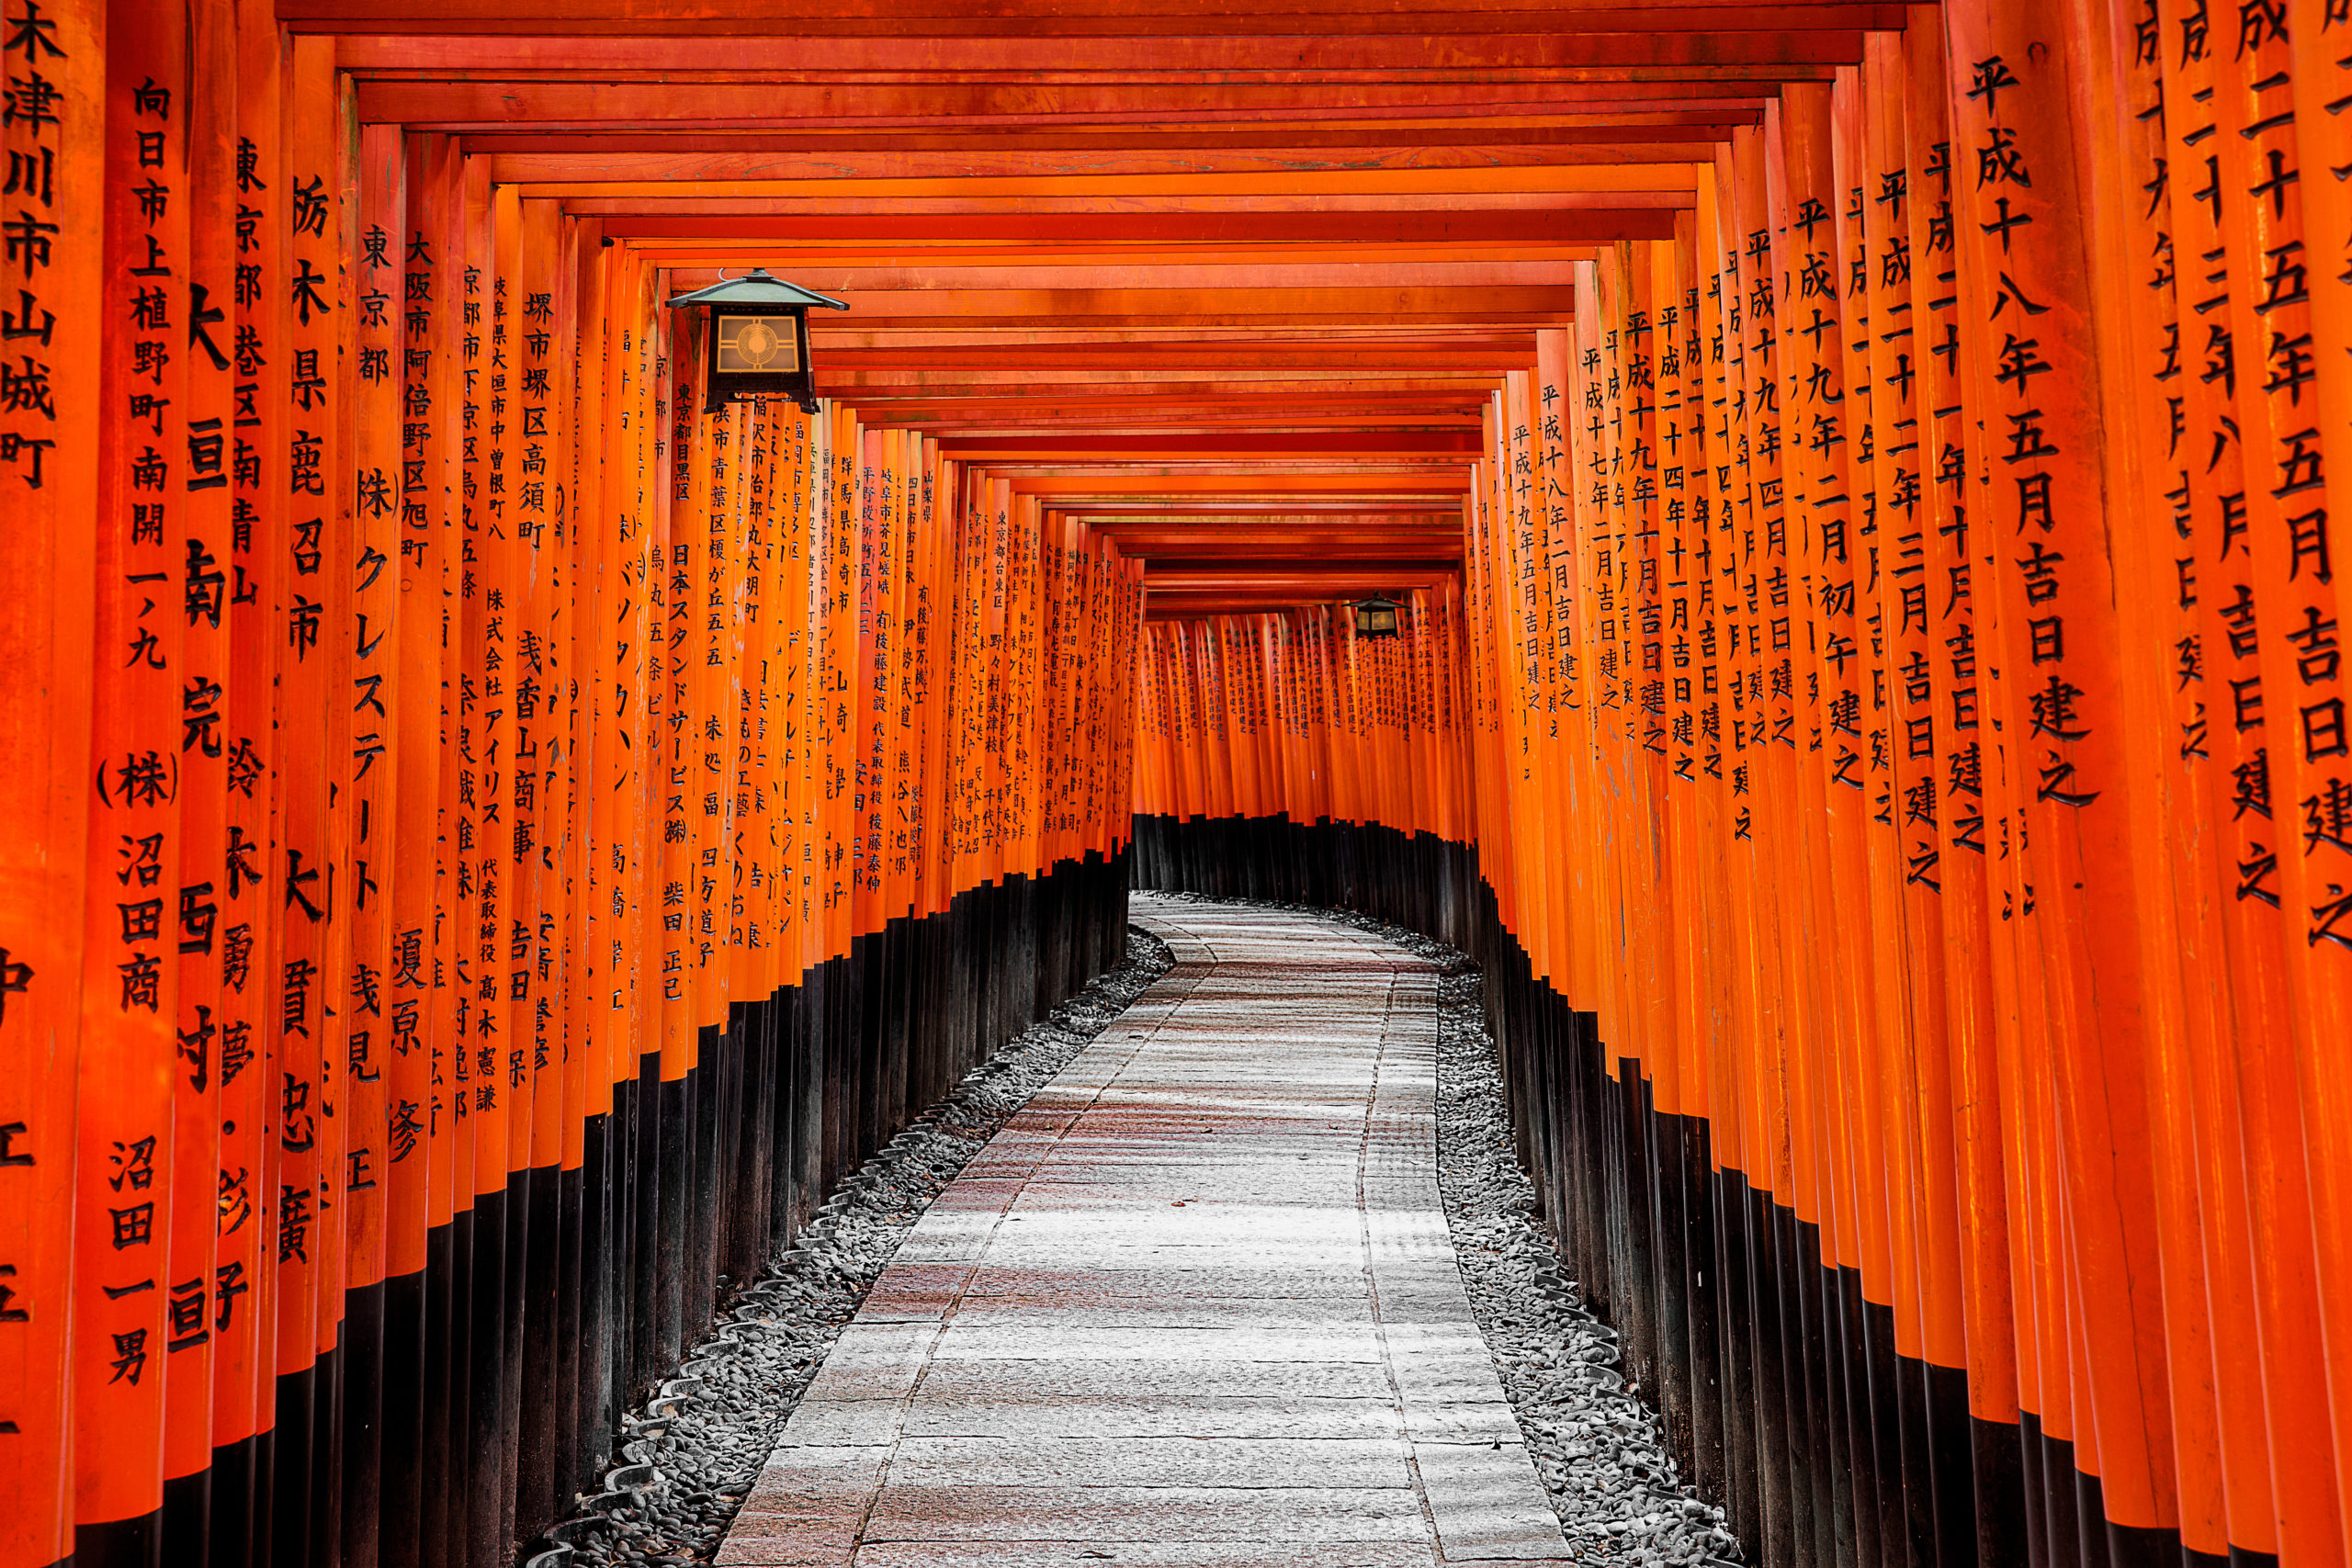 Repeated red torii gates at Fushimi Inari Taisha in Kyoto